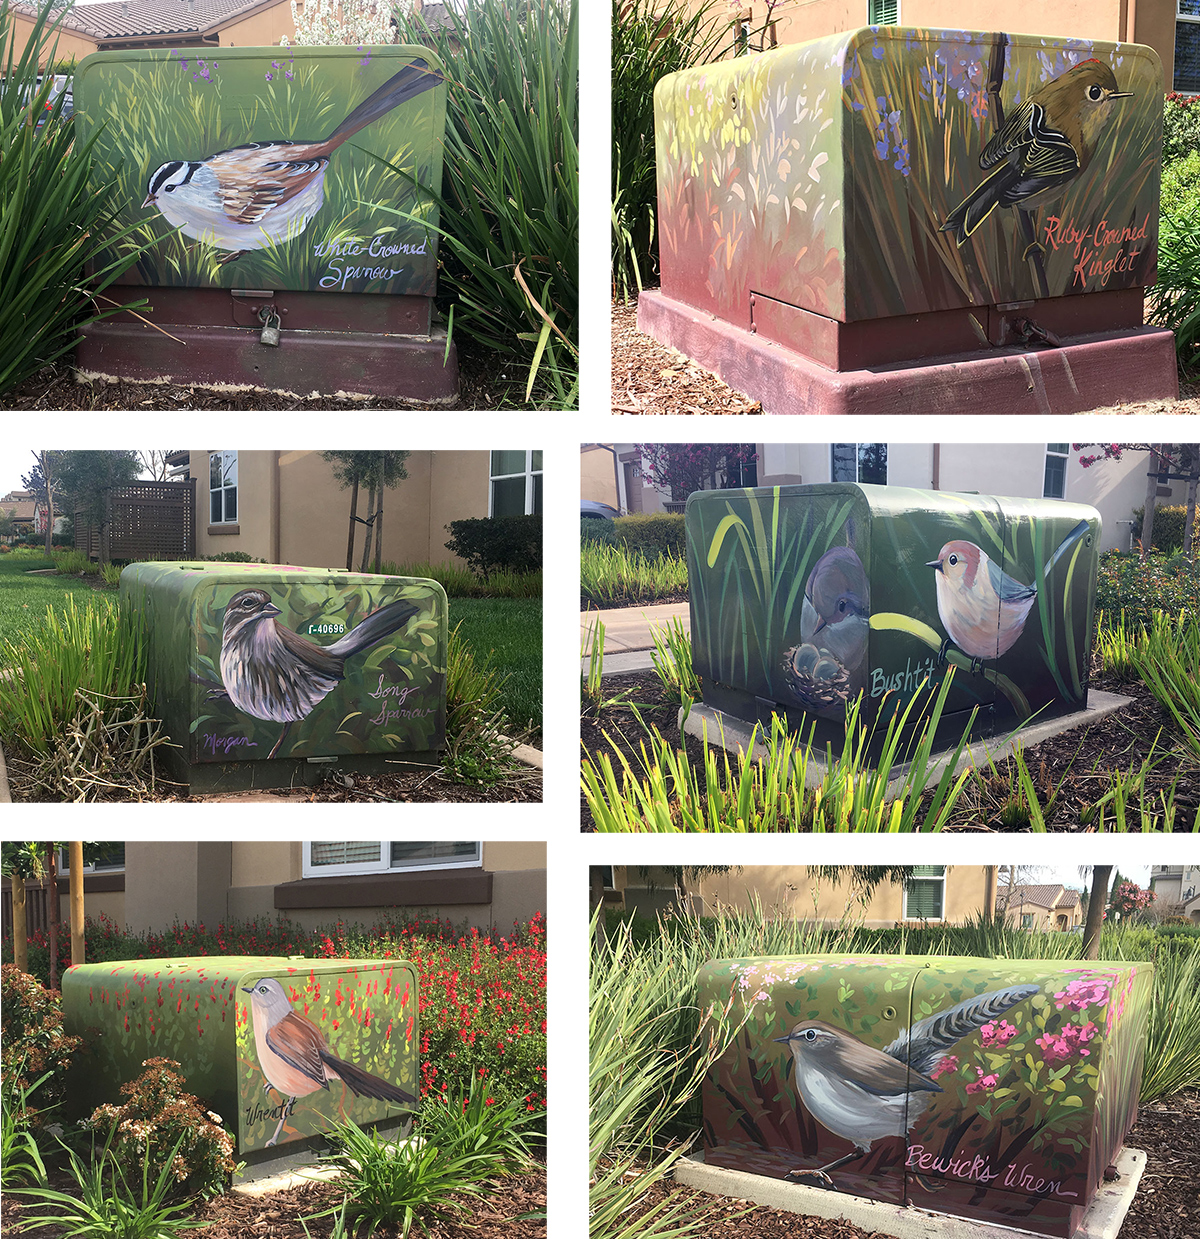 Utility Box Birds Painted by SF Bay Area Muralist Morgan Bricca